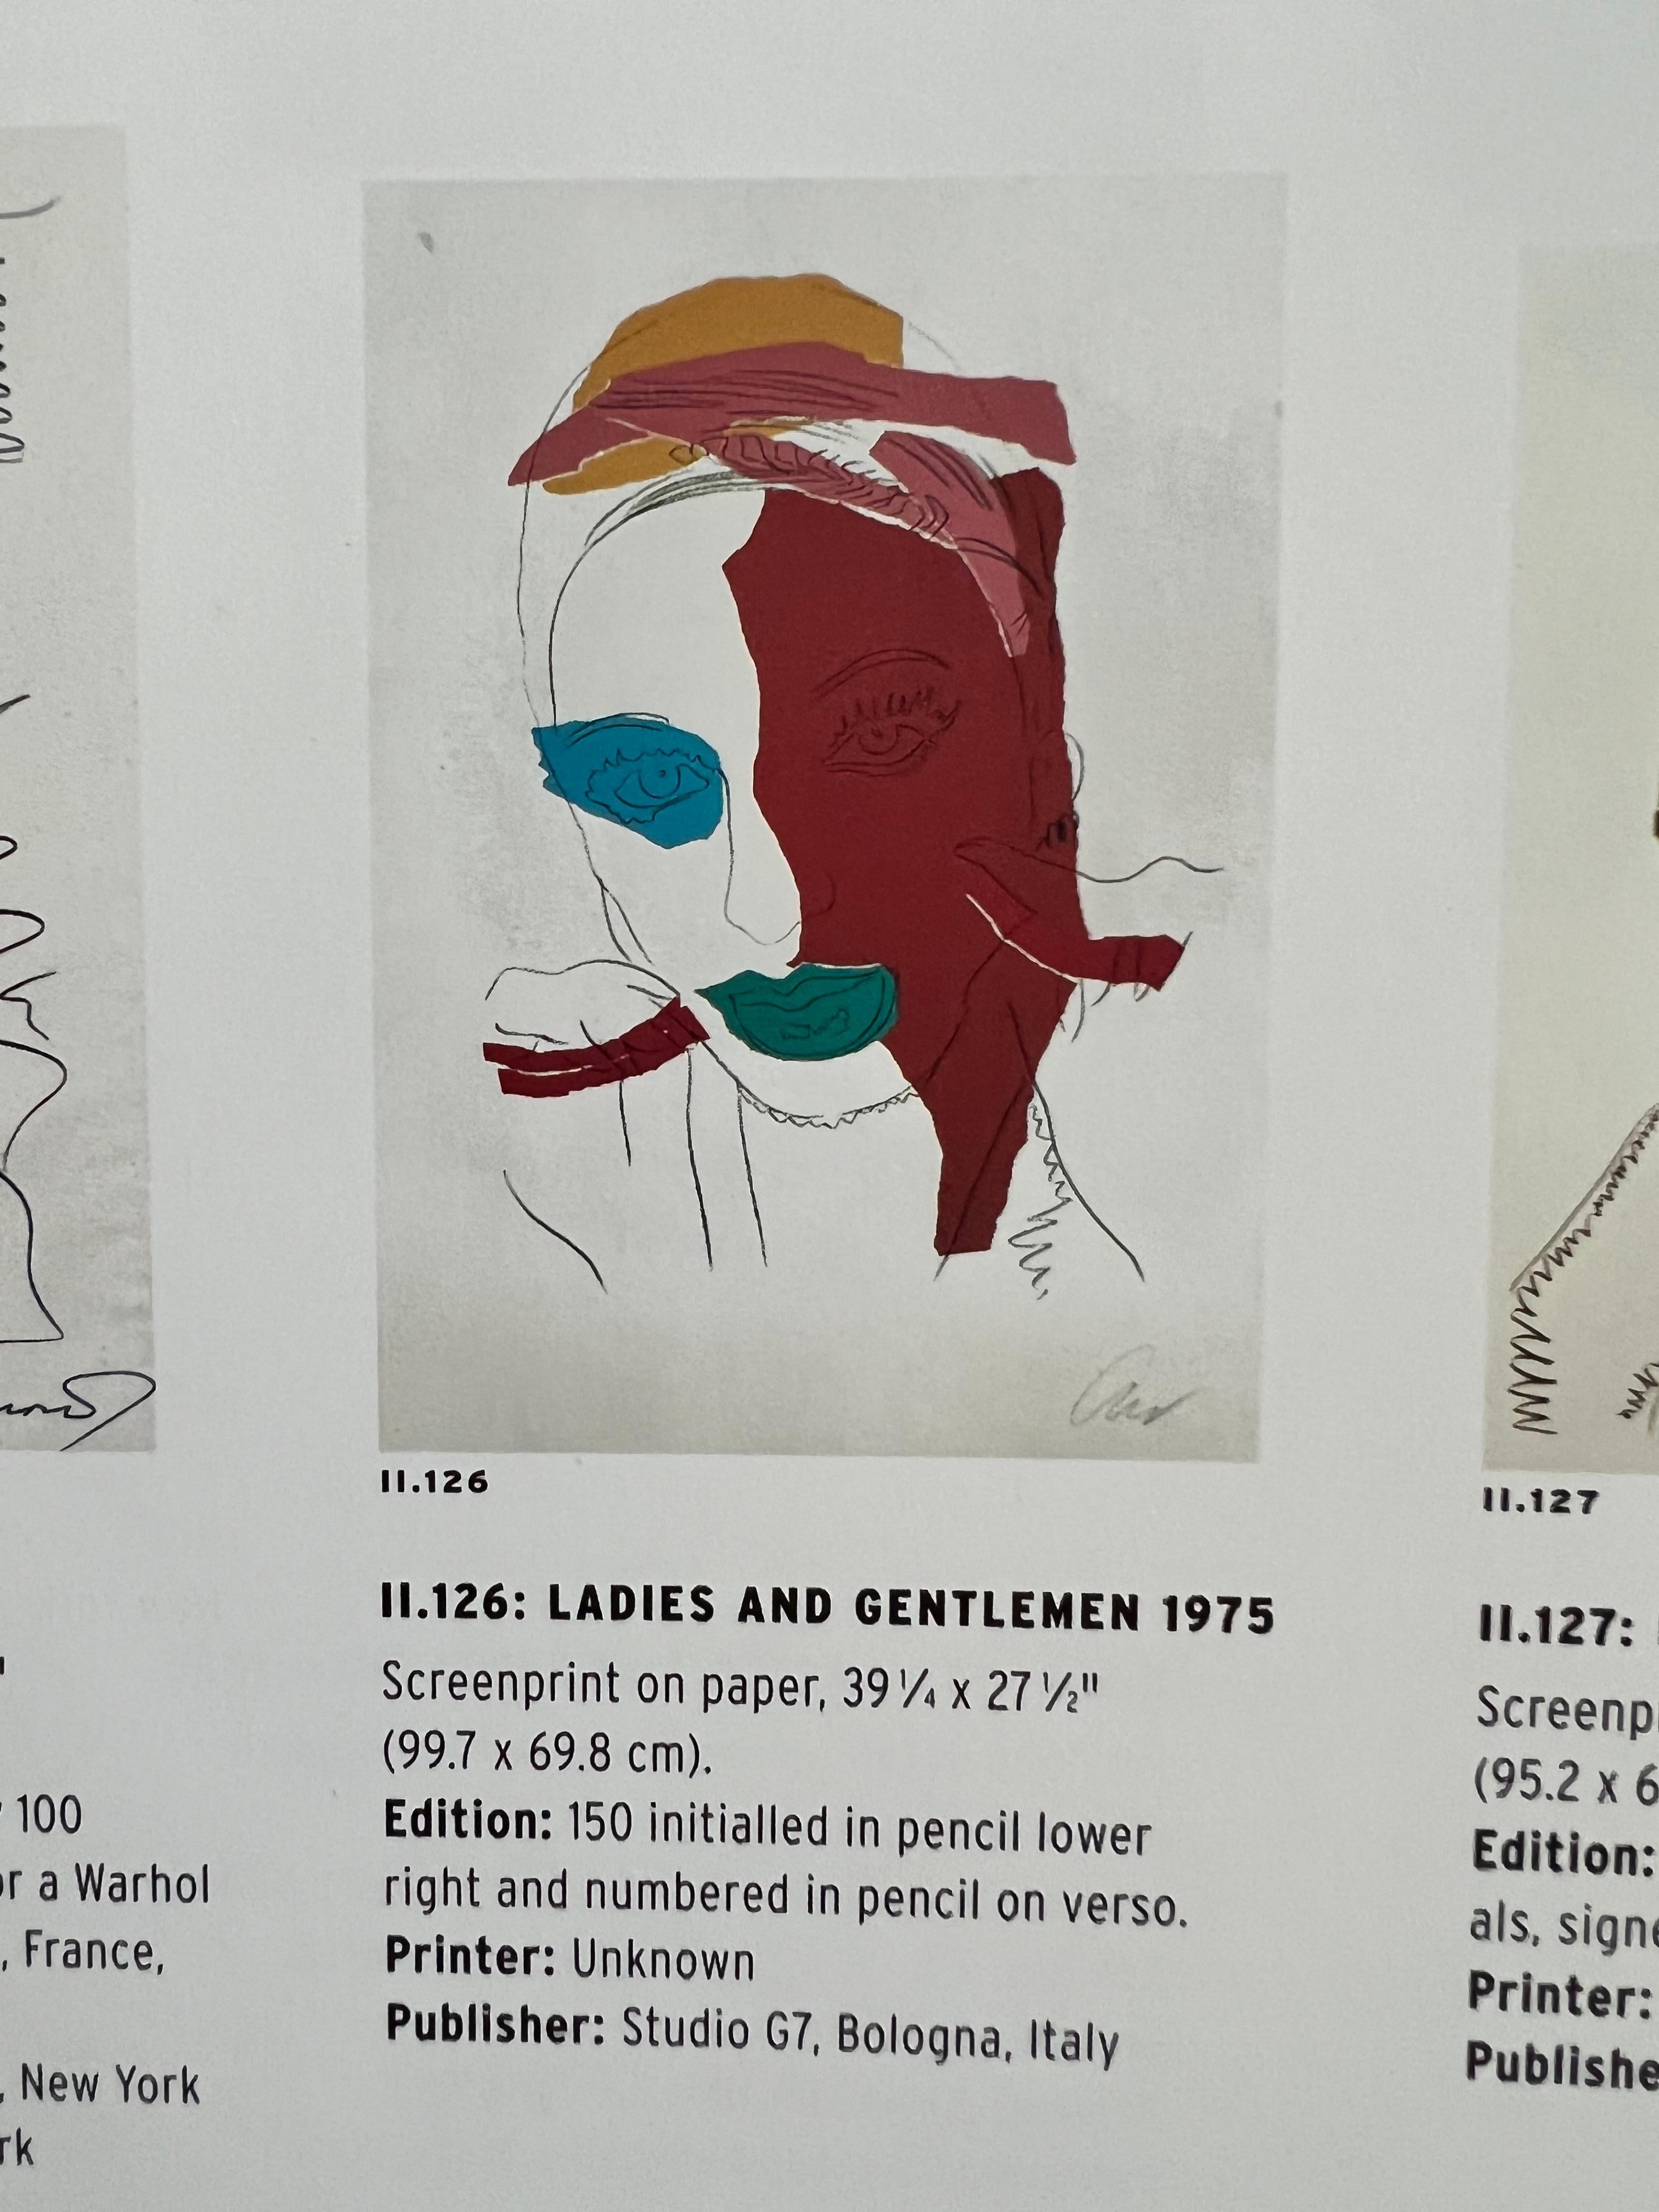 Andy Warhol – LADIES AND GENTLEMEN ( Ref II.126 ) – Hand-signed screenprint 1975 3